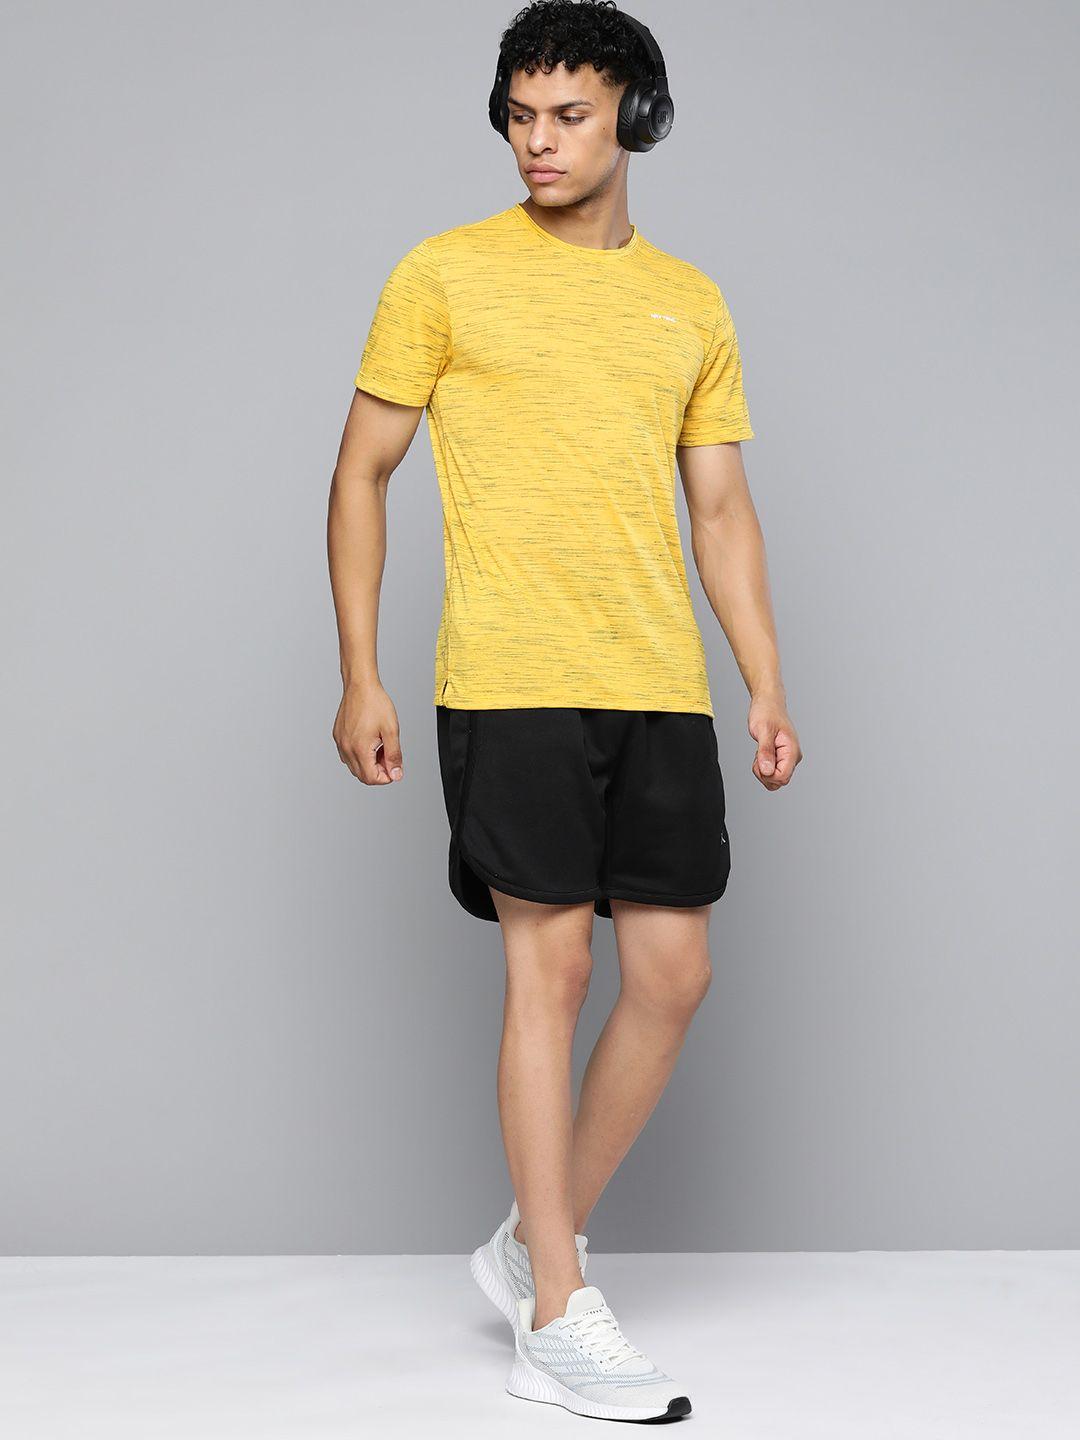 hrx by hrithik roshan men mustard yellow t-shirt